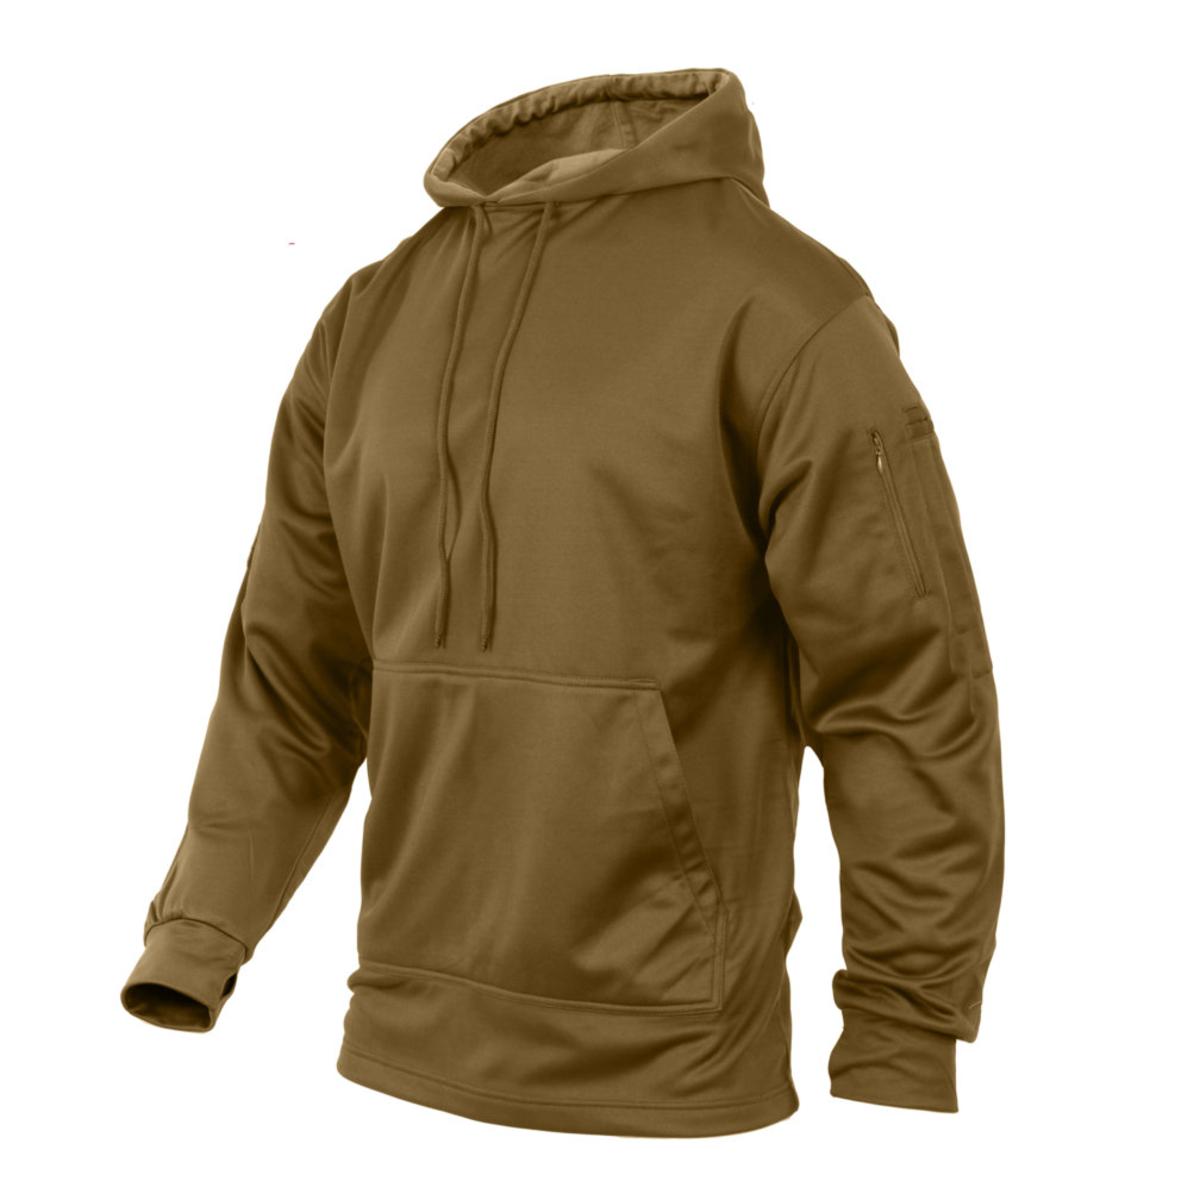 Rothco Concealed Carry Hoodie, Tactical Hooded Sweatshirt | eBay